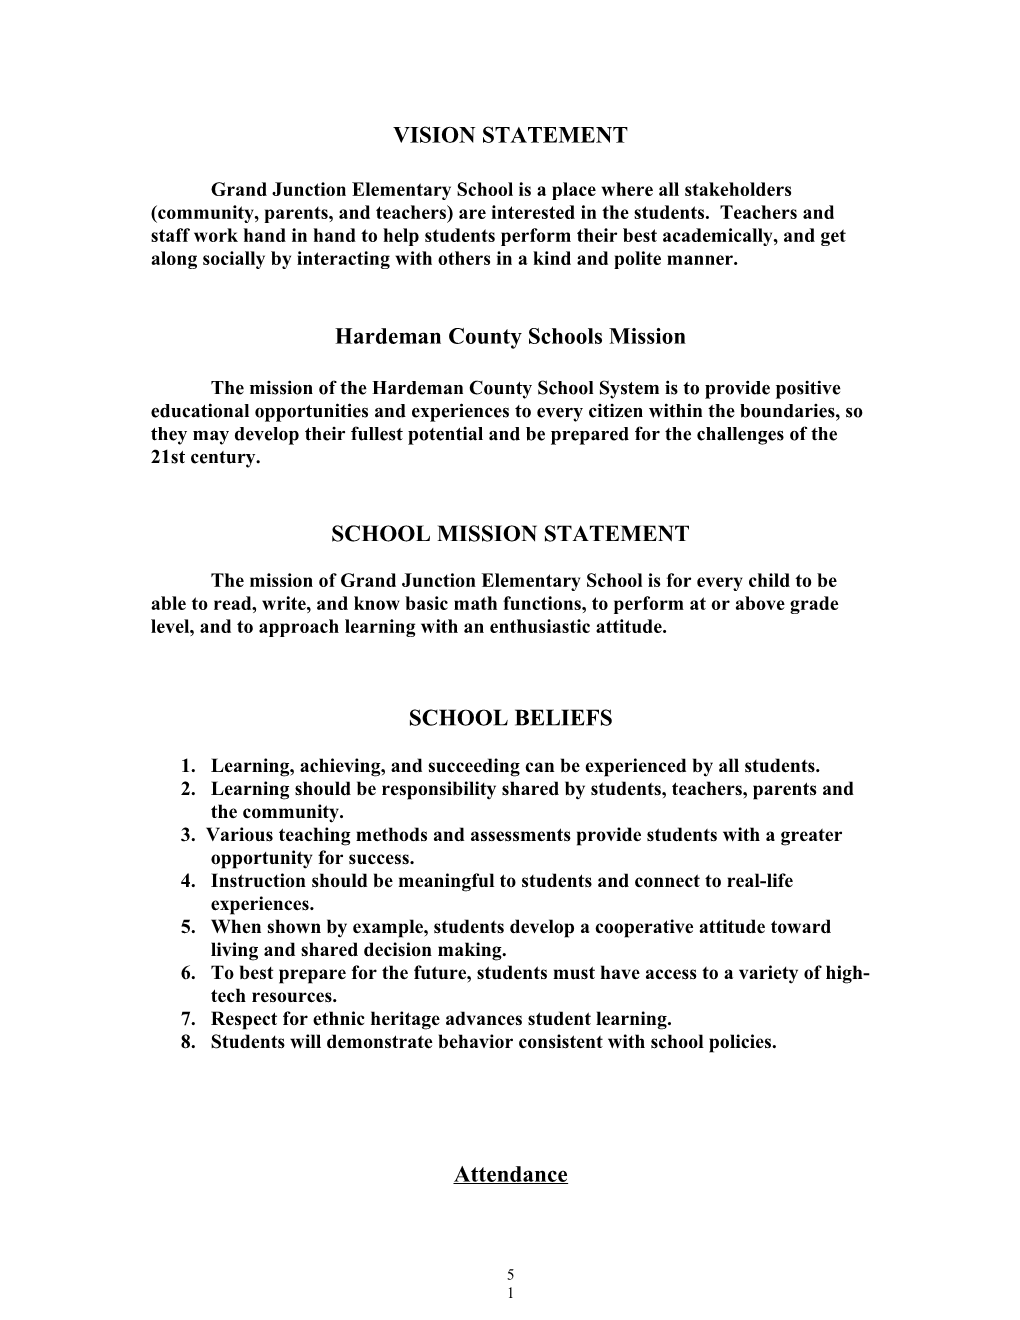 Hardeman County Schools Mission